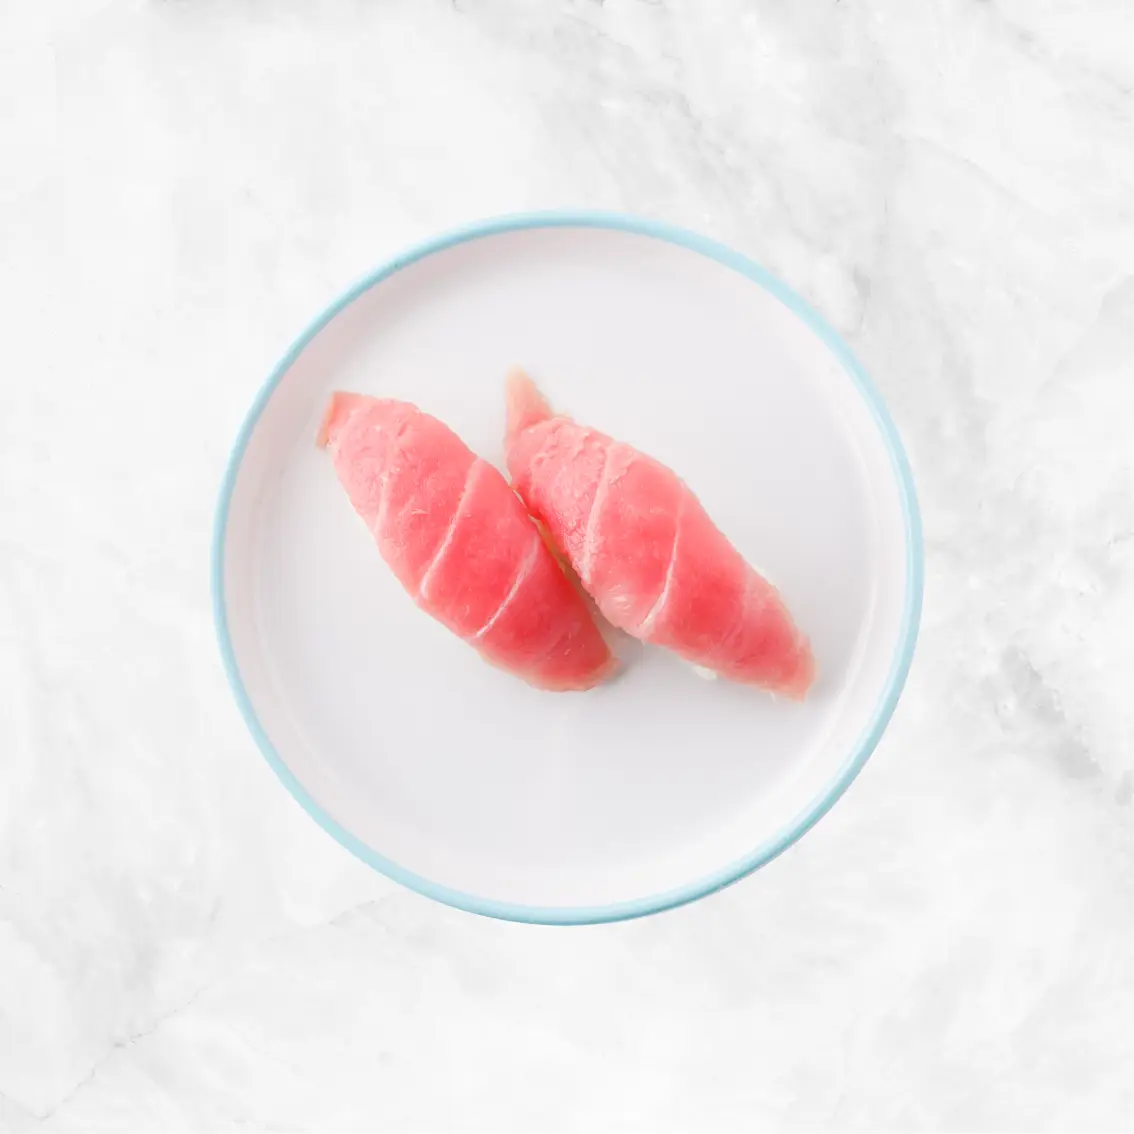 Sliced Maguro (Tuna) Sashimi